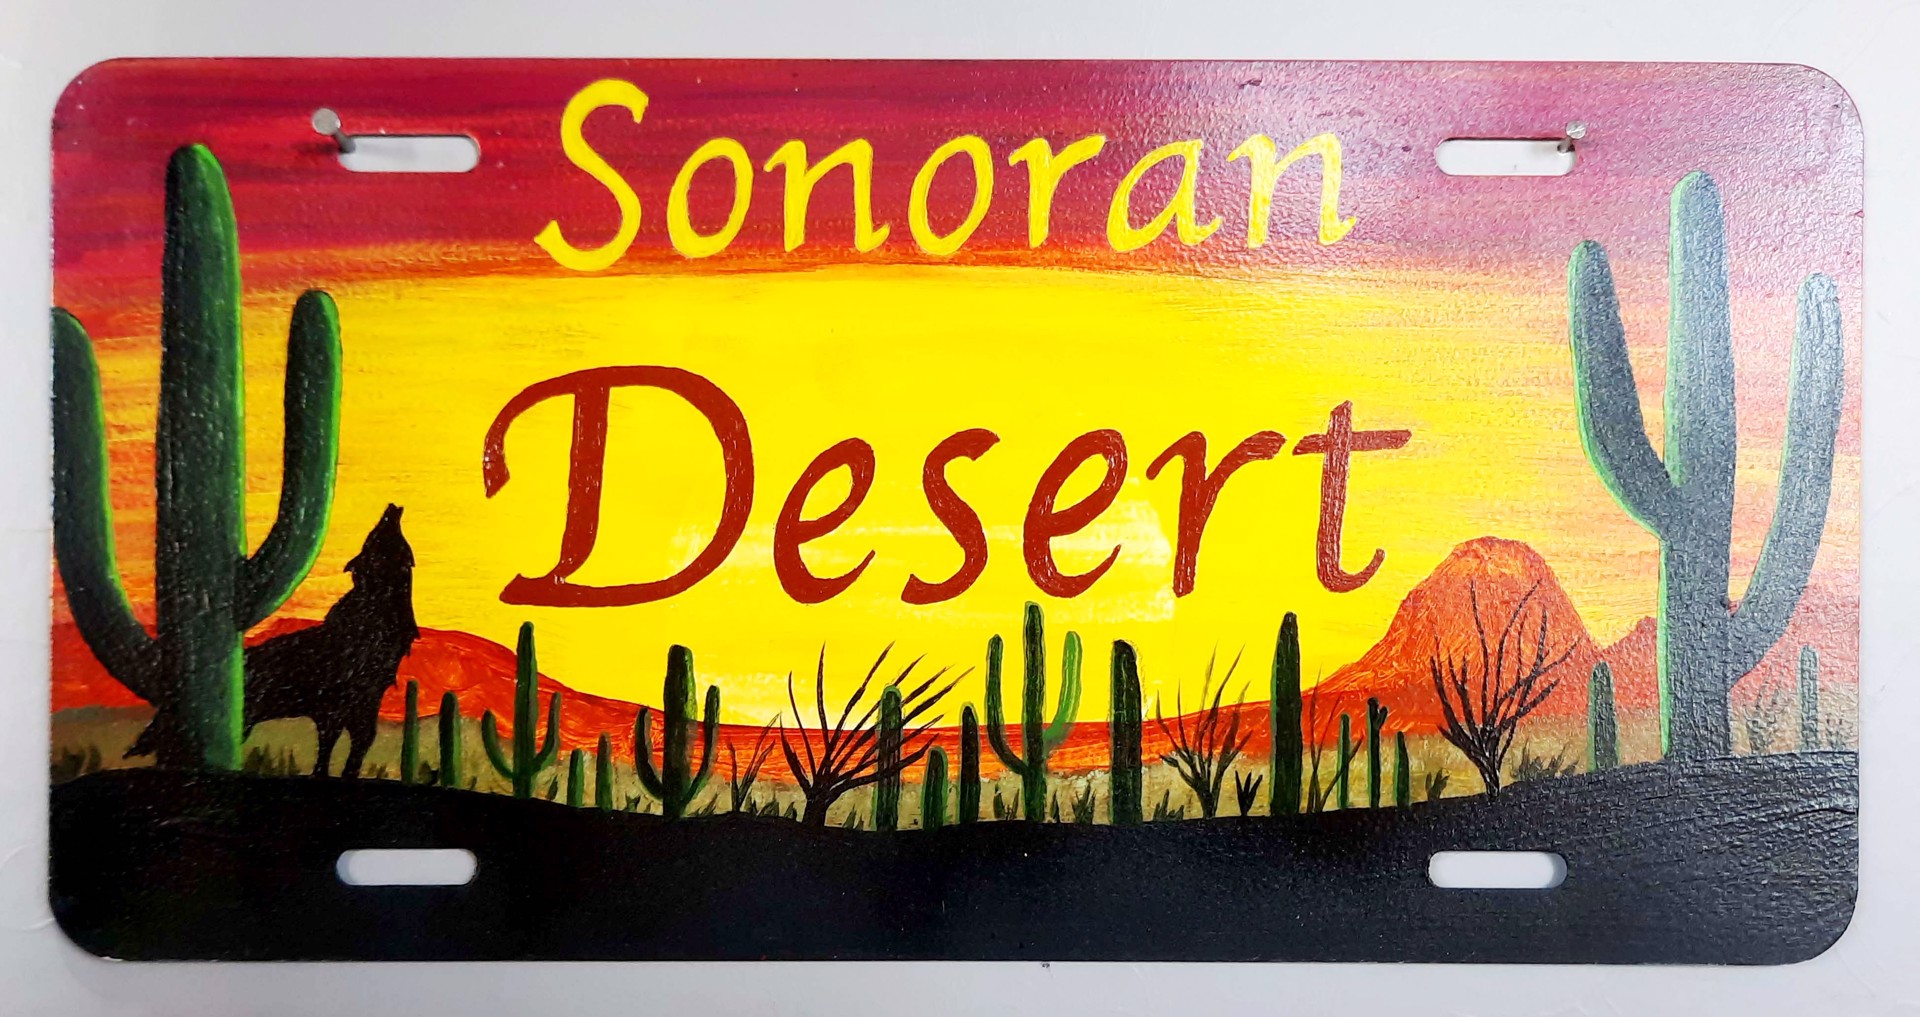 Sonoran Desert w/ Coyote License Plate, 474 by John Wulf